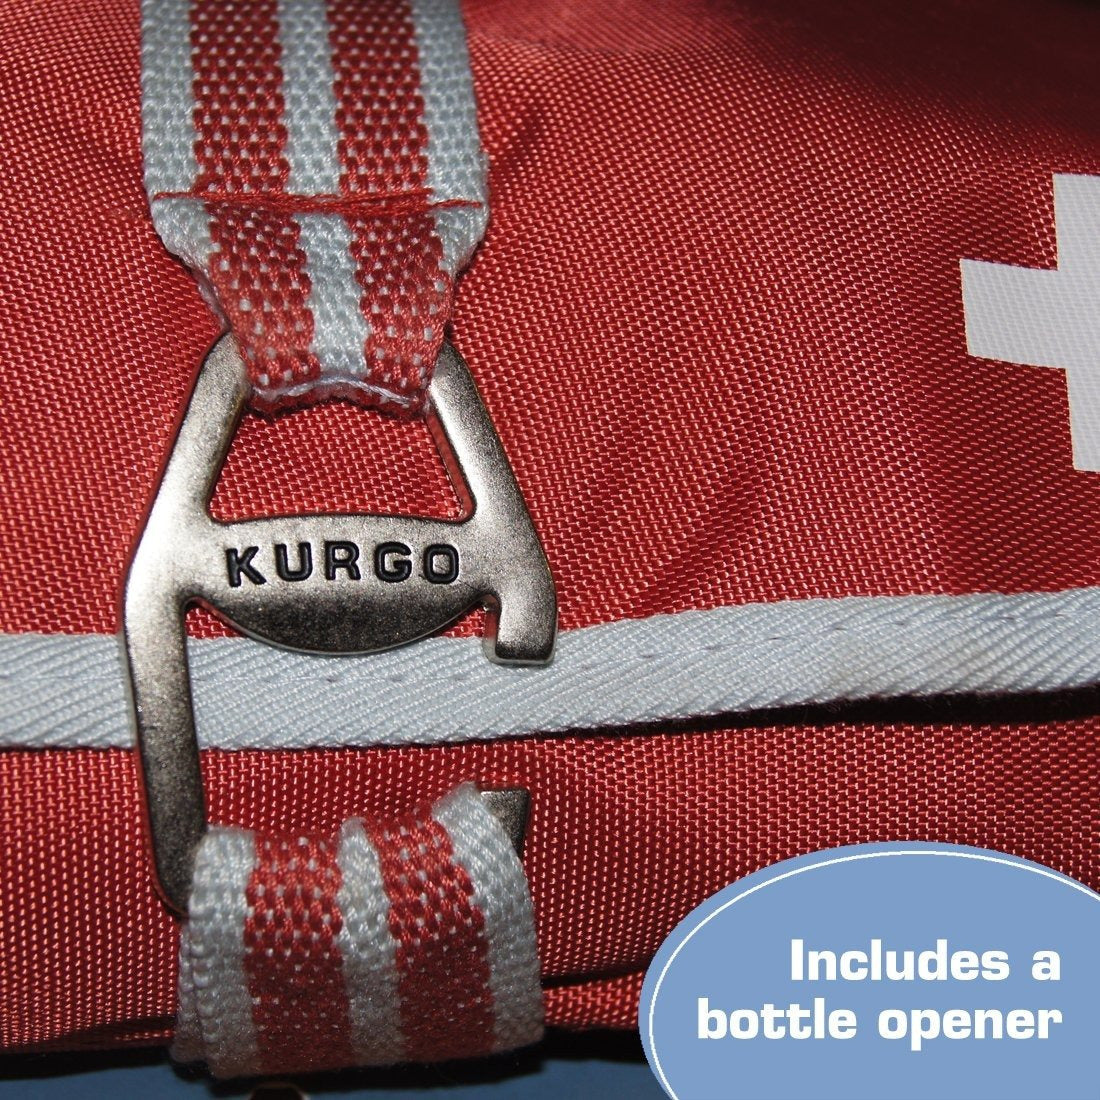 Kurgo - First Aid Kit